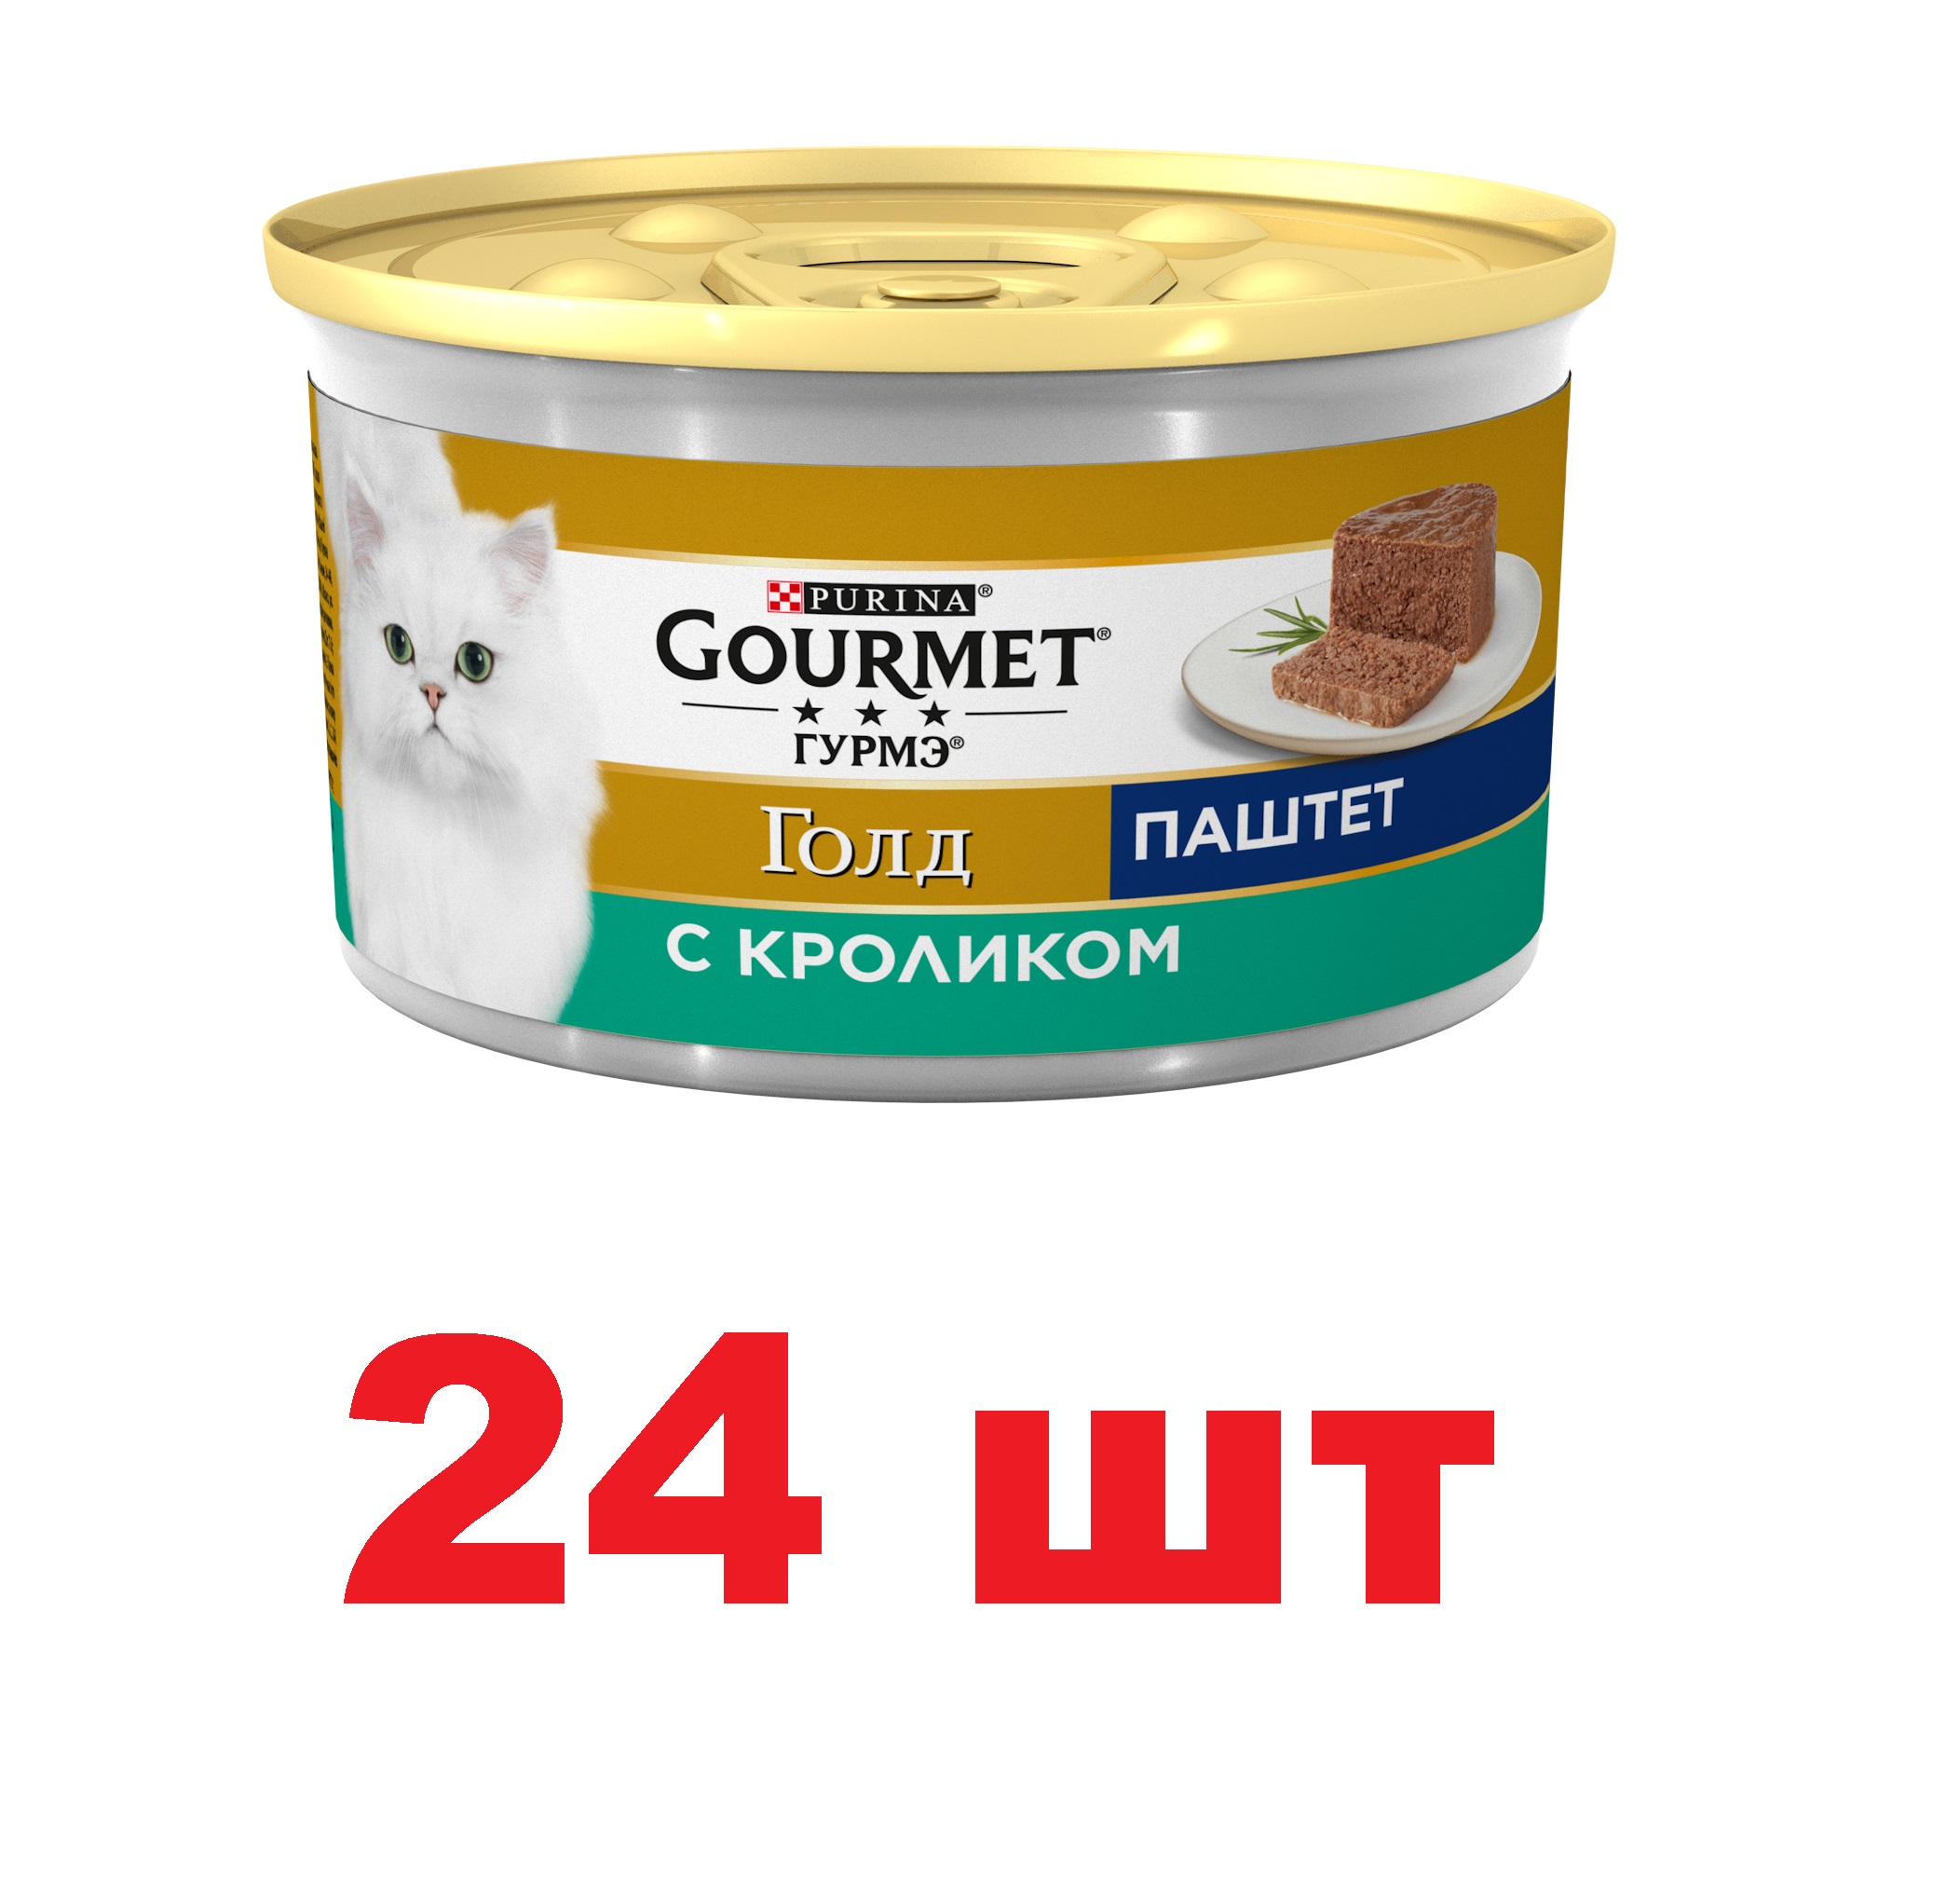 Гурме Голд 85гр - Кролик паштет (Gourmet)  1кор = 24шт